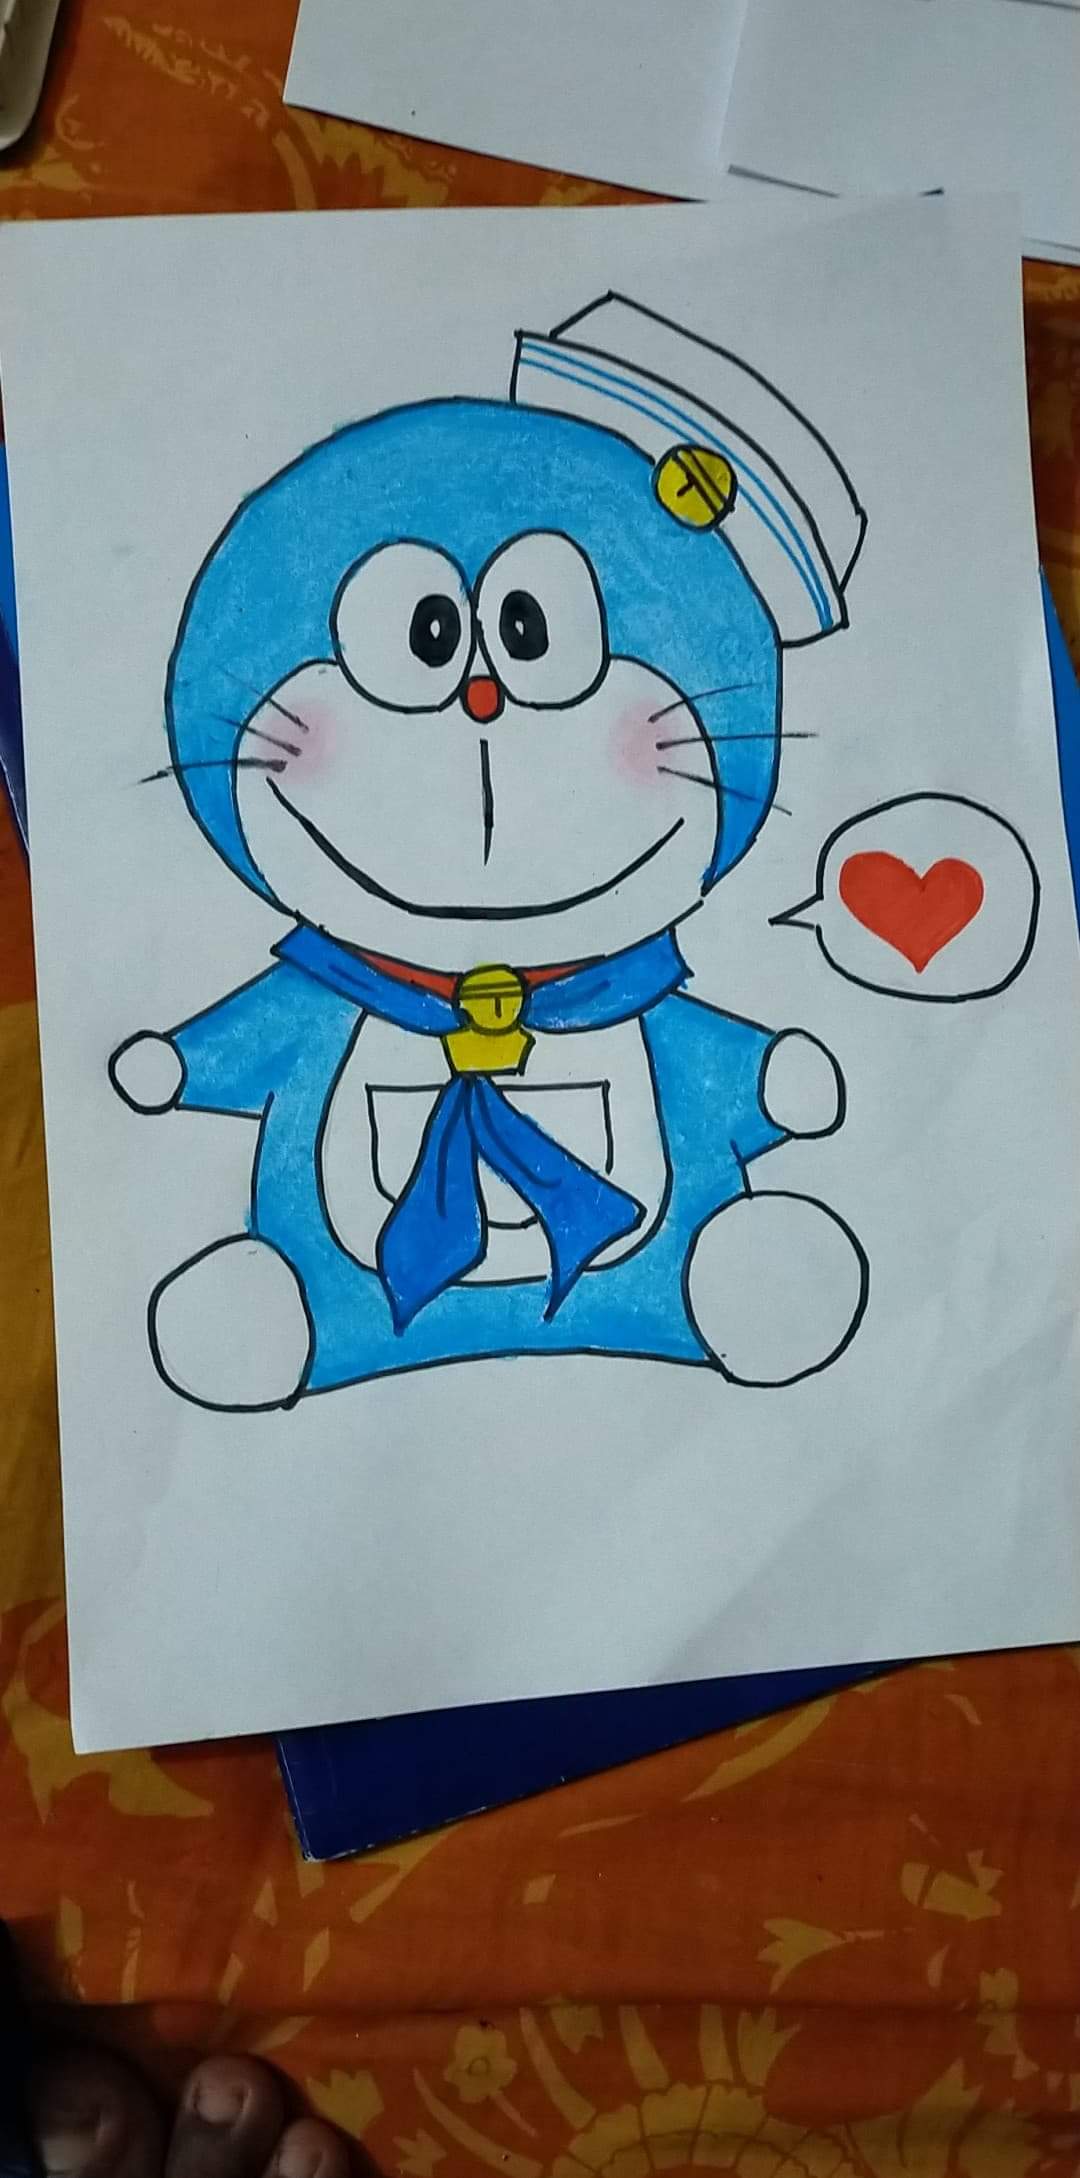 Our drawing of Doraemon by EvyOriginal on DeviantArt